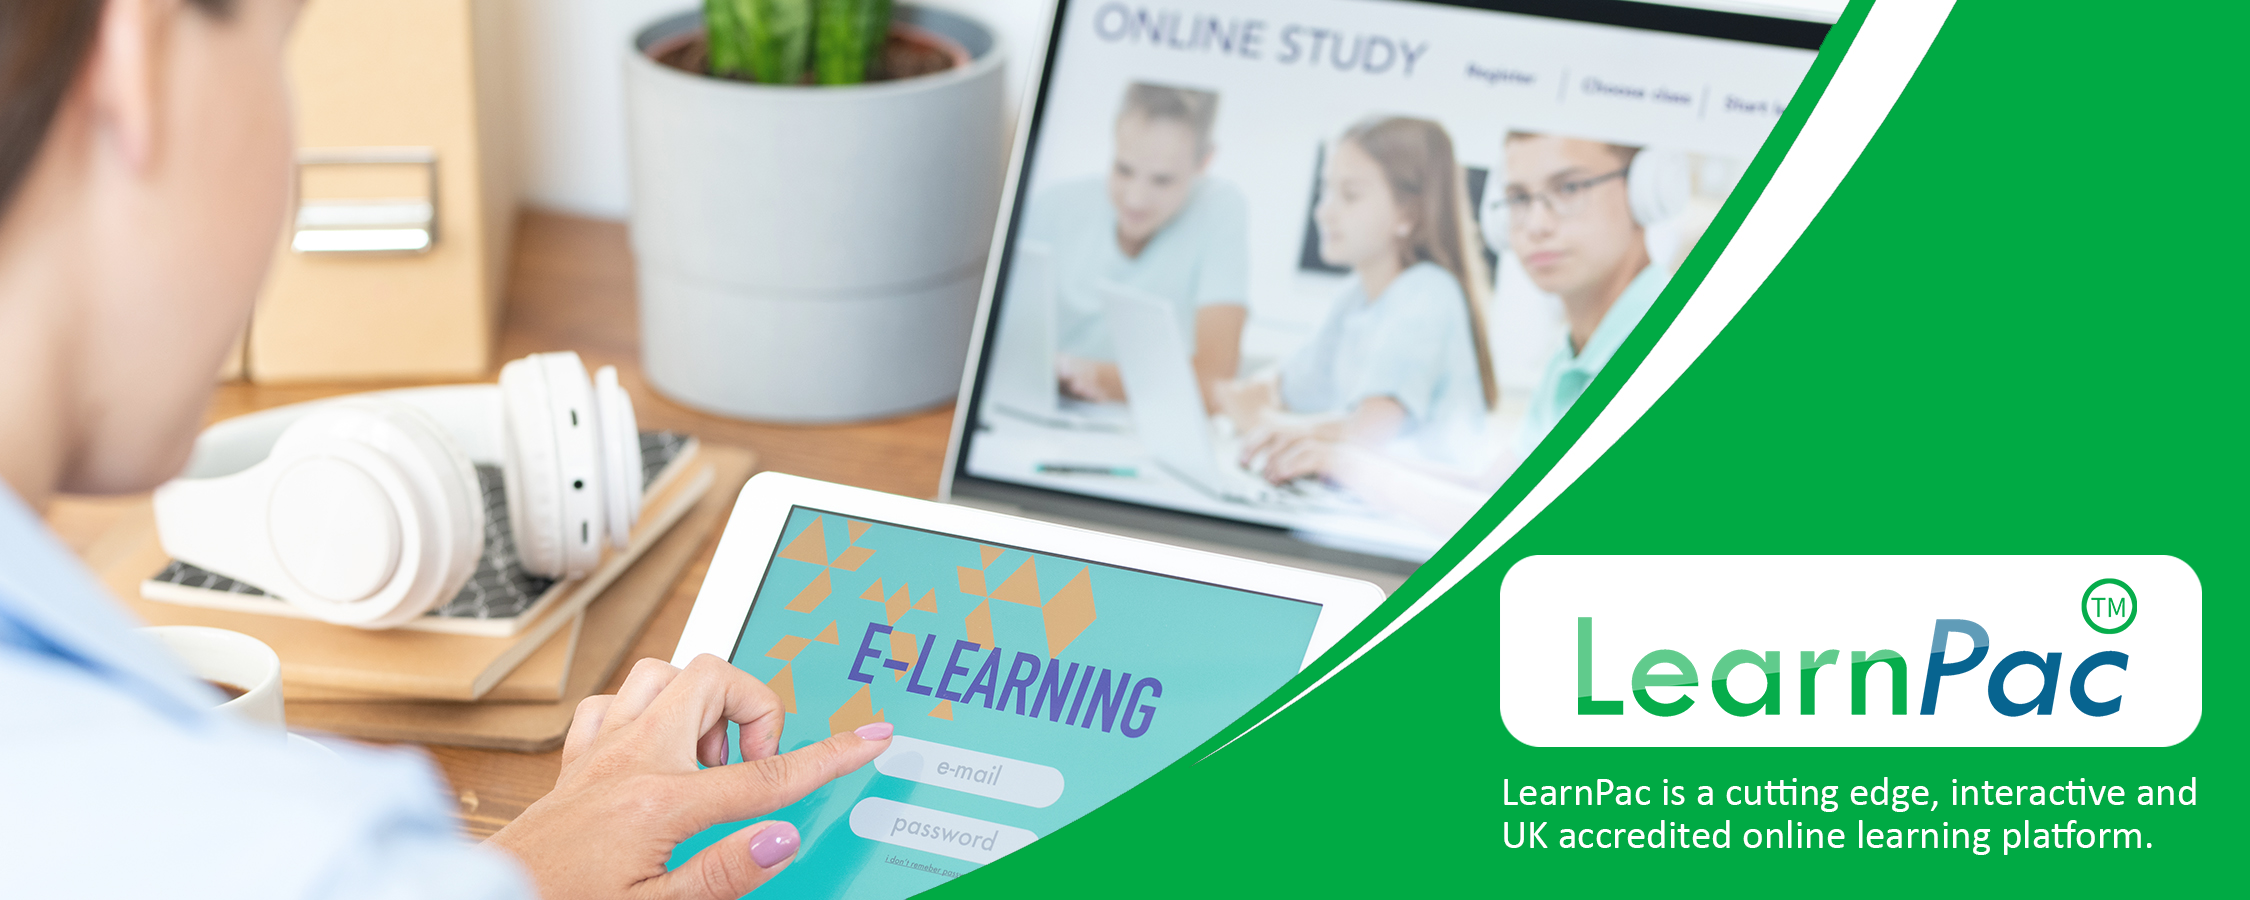 Candidate Mandatory Training - Online Learning Courses - E-Learning Courses - LearnPac Systems UK -